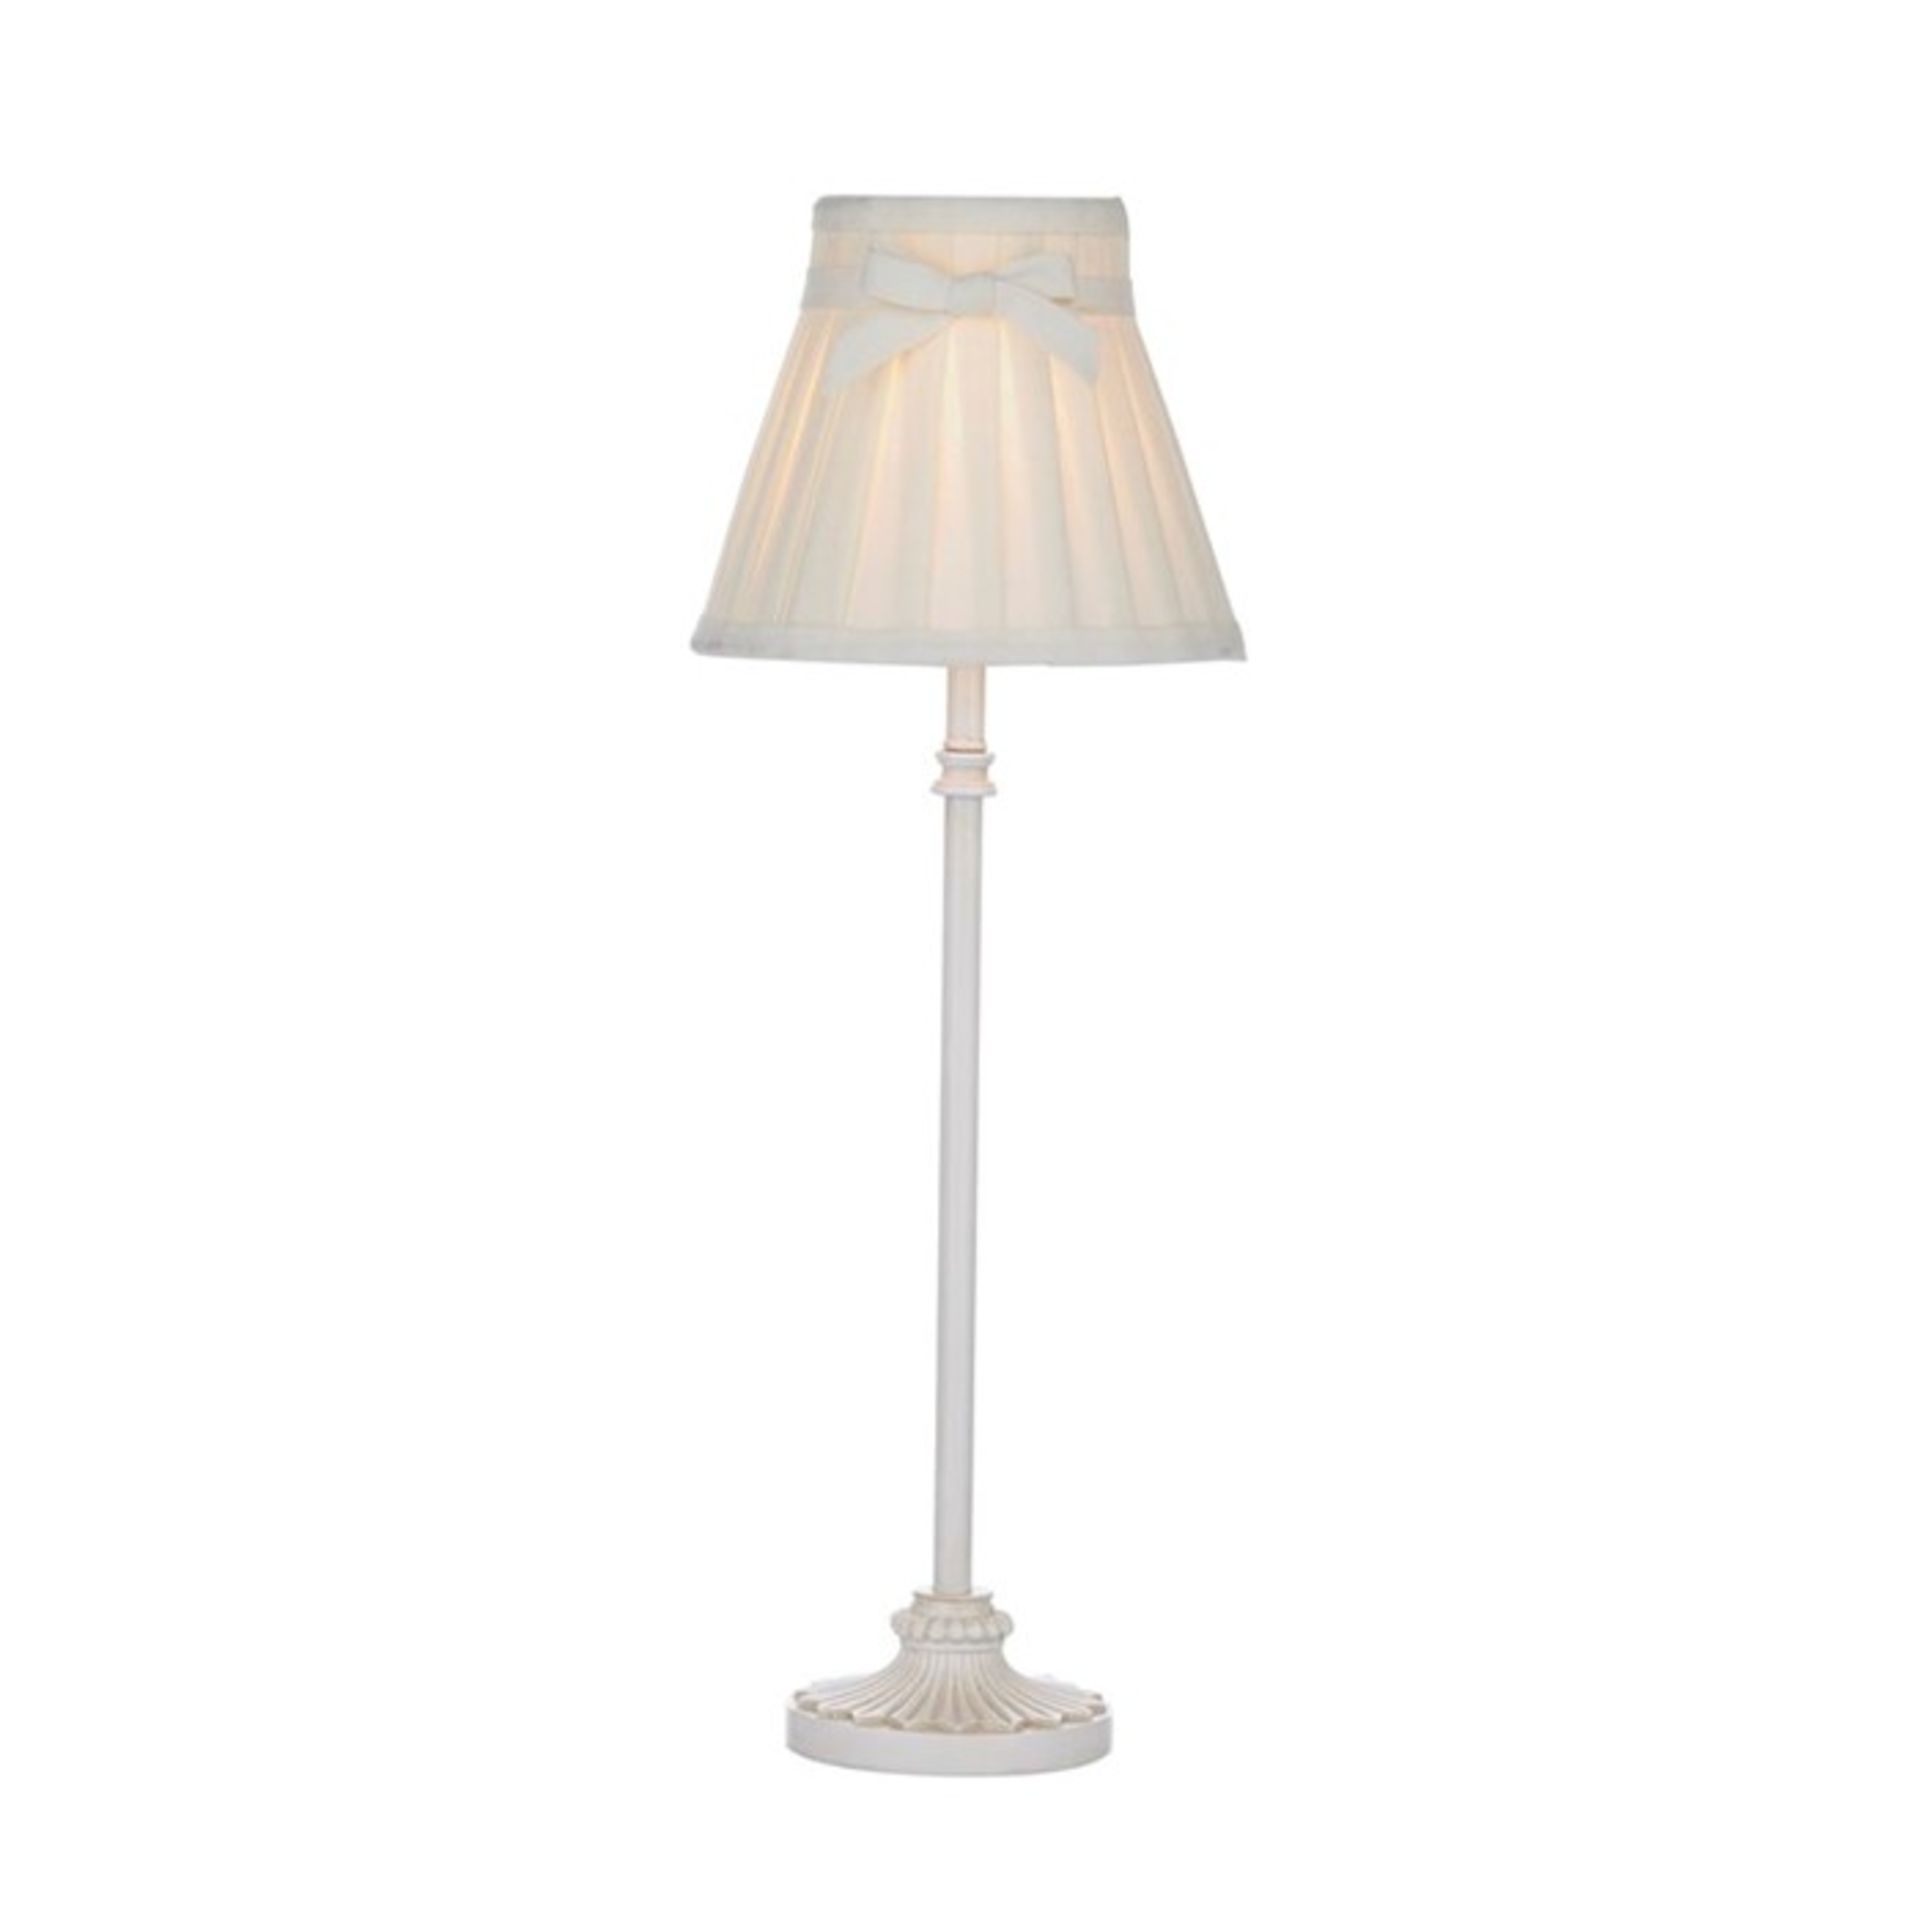 Lily Manor, Siri 50cm Table Lamp X2 (CREAM) - RRP £33.99 (DLI4371 - 15435/48 - 15435/49) 1E